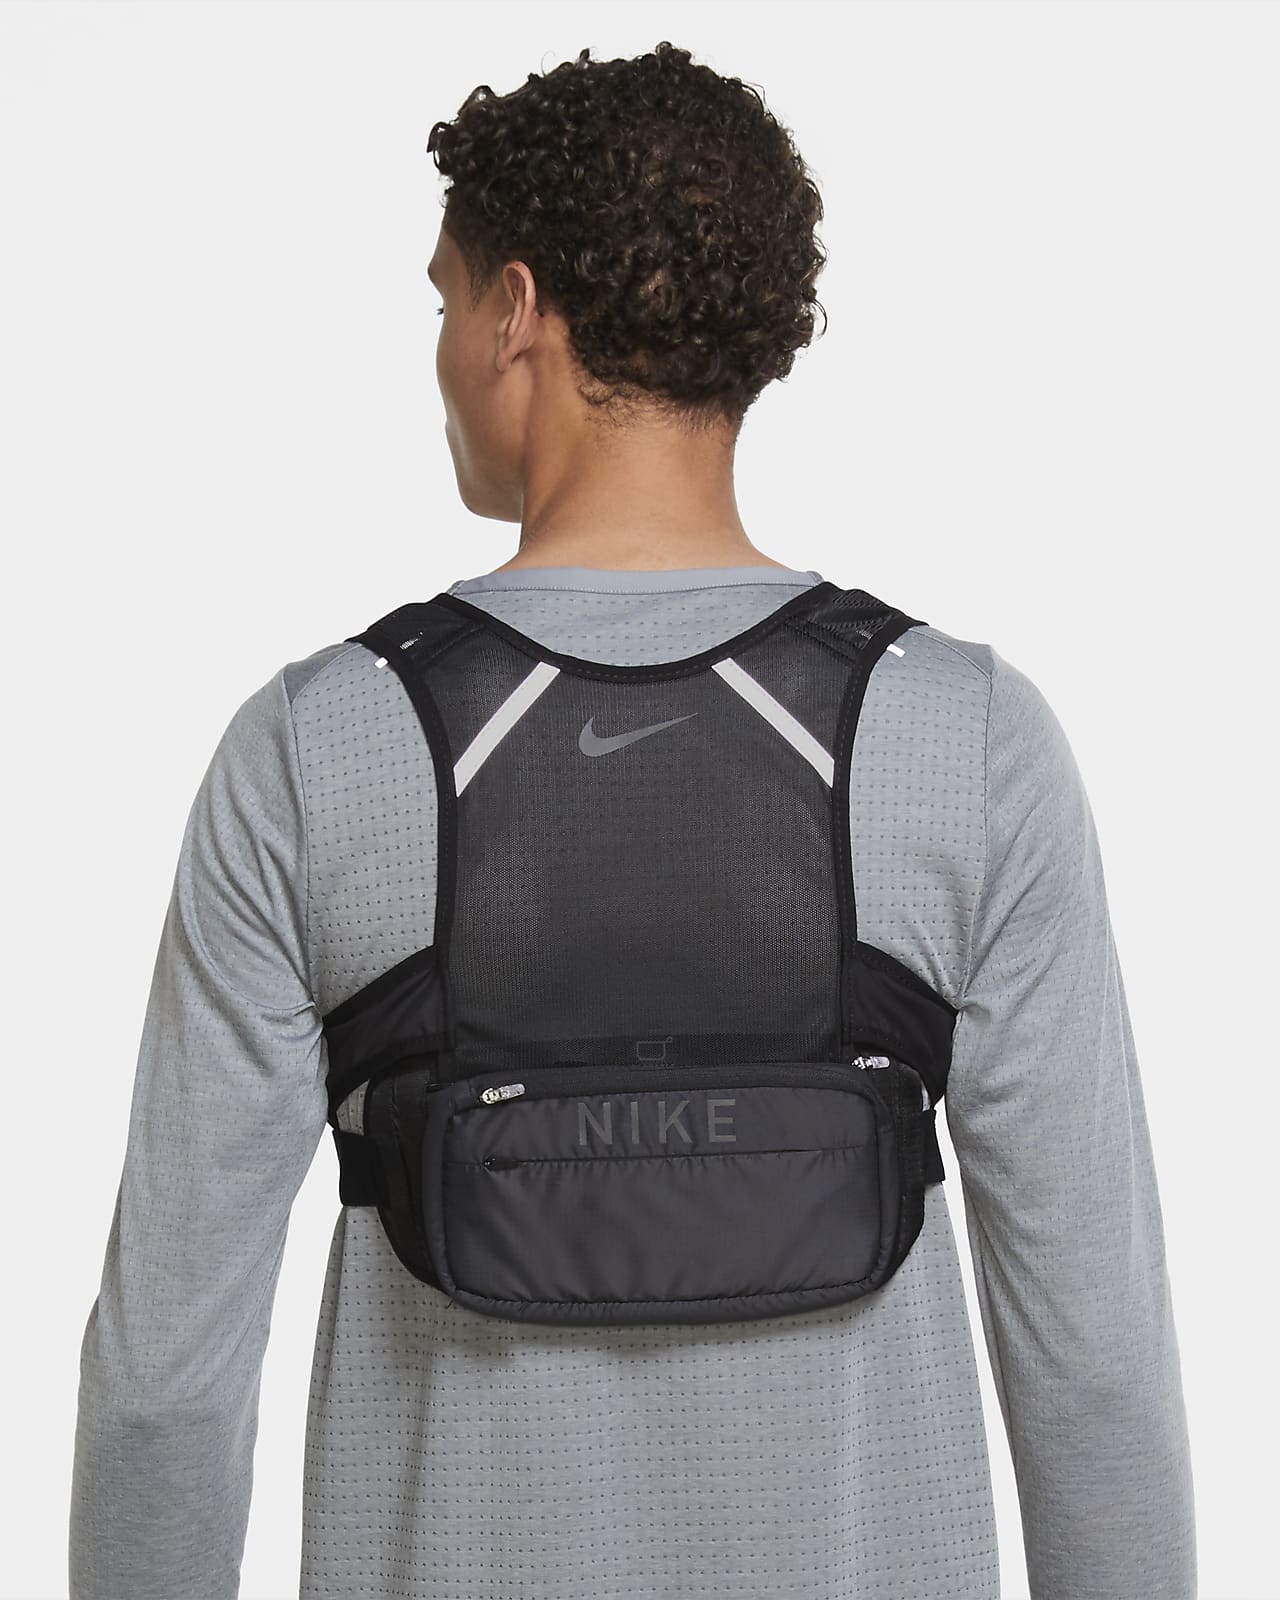 Beroemdheid Bouwen op Gevoelig voor Nike Transform Packable Running Vest. Nike JP